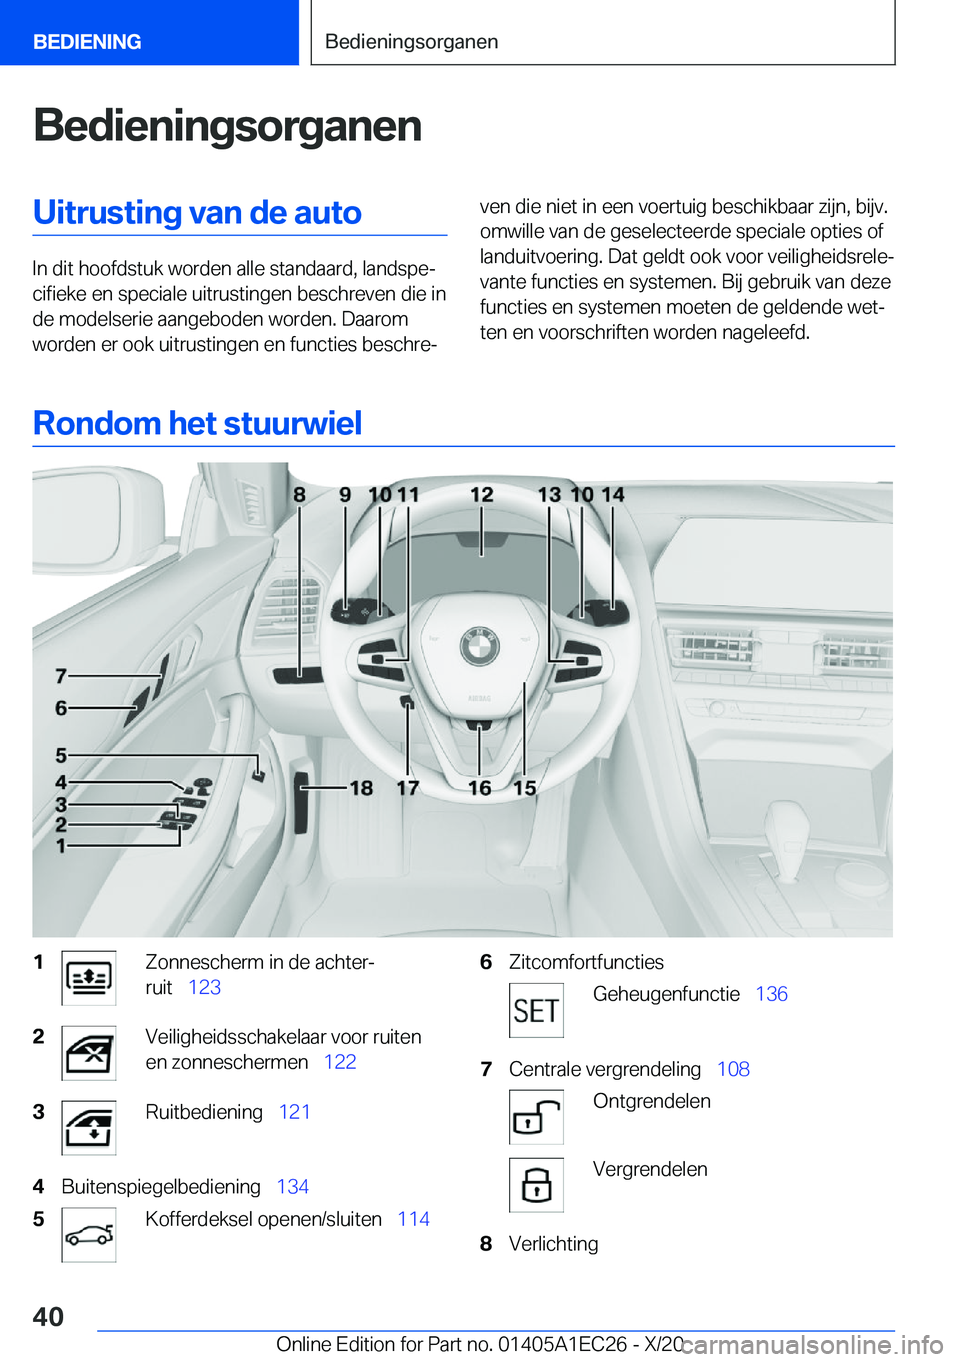 BMW 8 SERIES GRAN COUPE 2021  Instructieboekjes (in Dutch) �B�e�d�i�e�n�i�n�g�s�o�r�g�a�n�e�n�U�i�t�r�u�s�t�i�n�g��v�a�n��d�e��a�u�t�o
�I�n��d�i�t��h�o�o�f�d�s�t�u�k��w�o�r�d�e�n��a�l�l�e��s�t�a�n�d�a�a�r�d�,��l�a�n�d�s�p�ej�c�i�f�i�e�k�e��e�n��s�